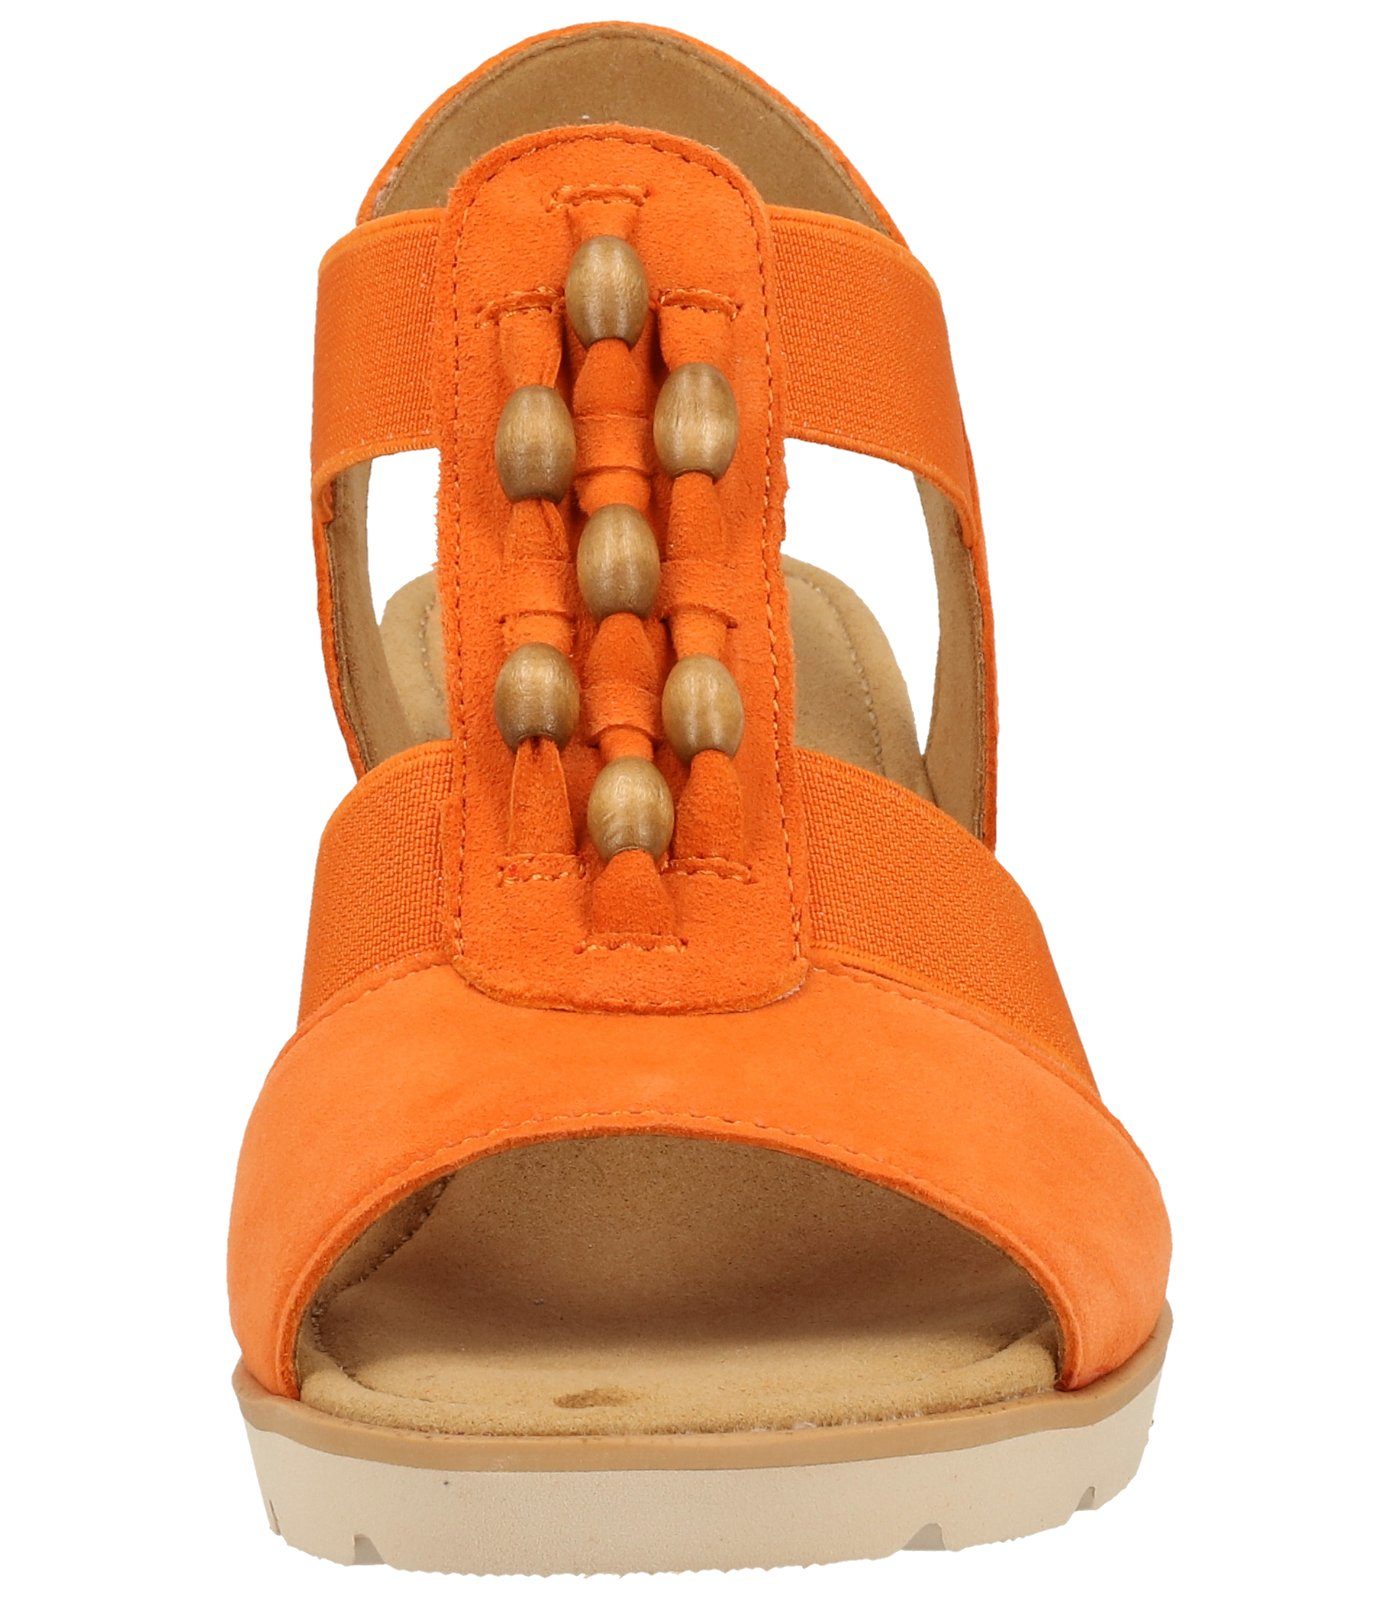 Gabor Leder/Textil Orange Keilsandalette Sandalen